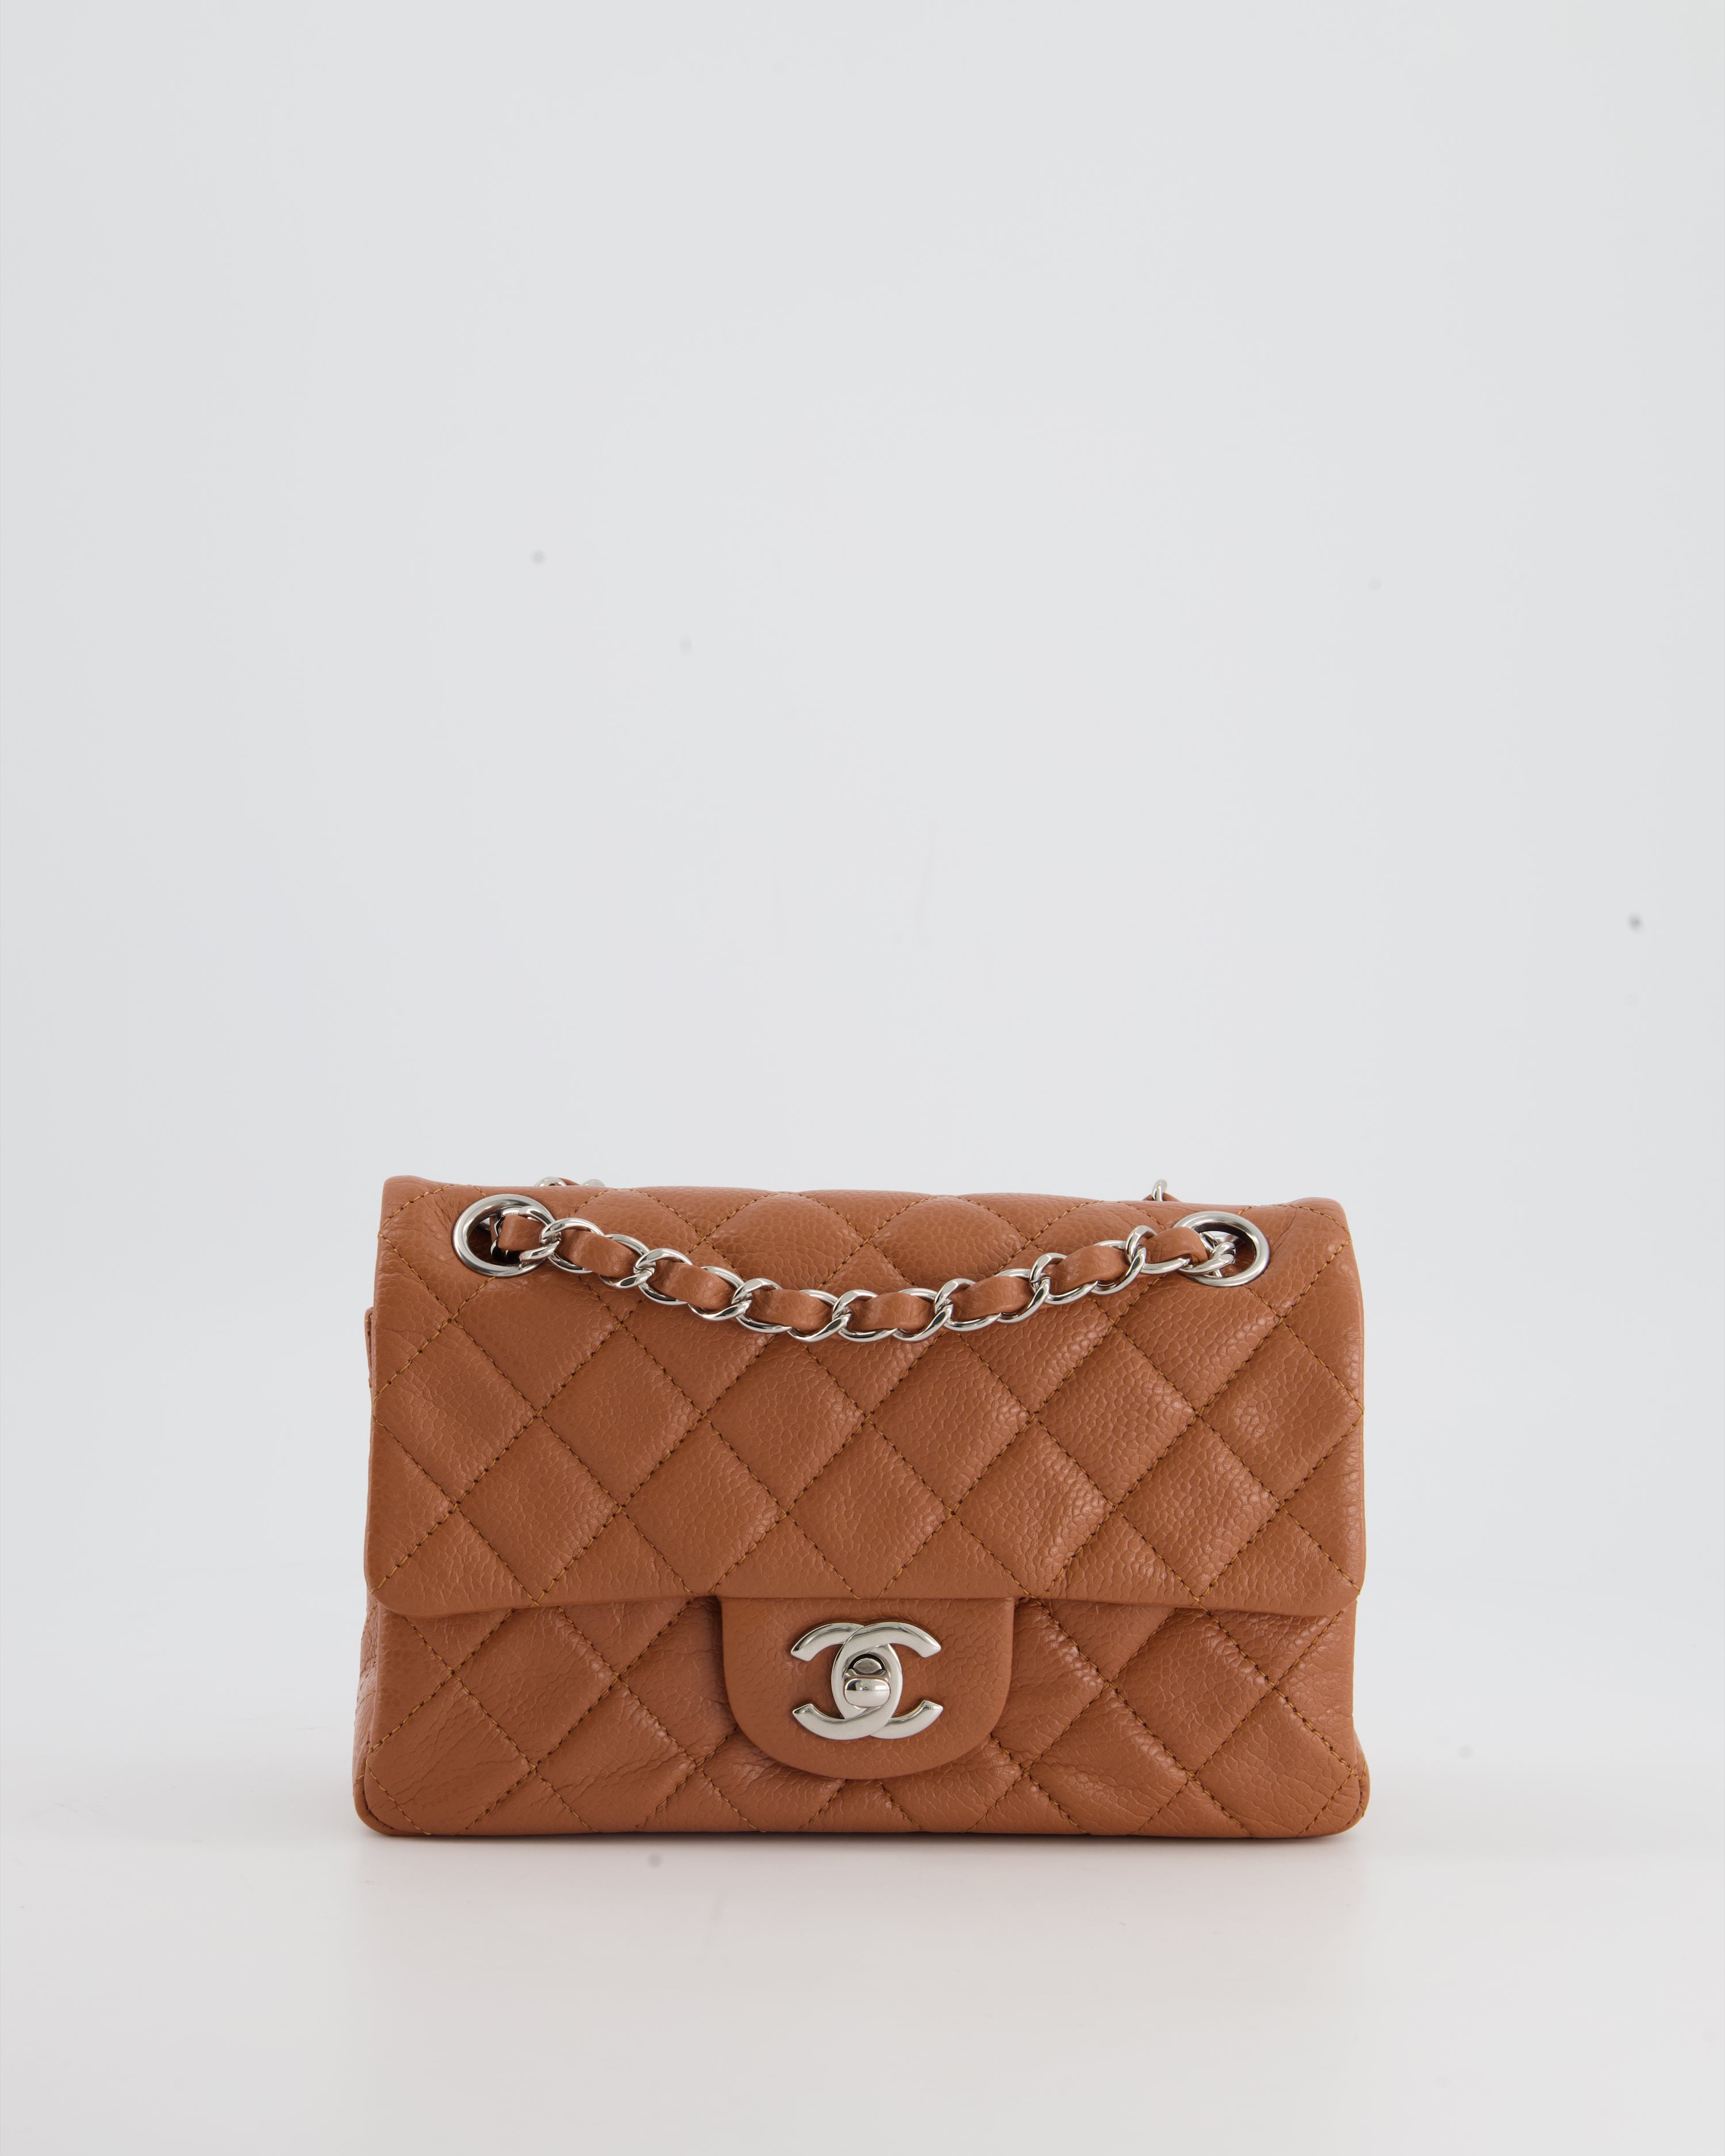 HOT* Chanel Caramel Mini Rectangular Bag in Caviar Leather with